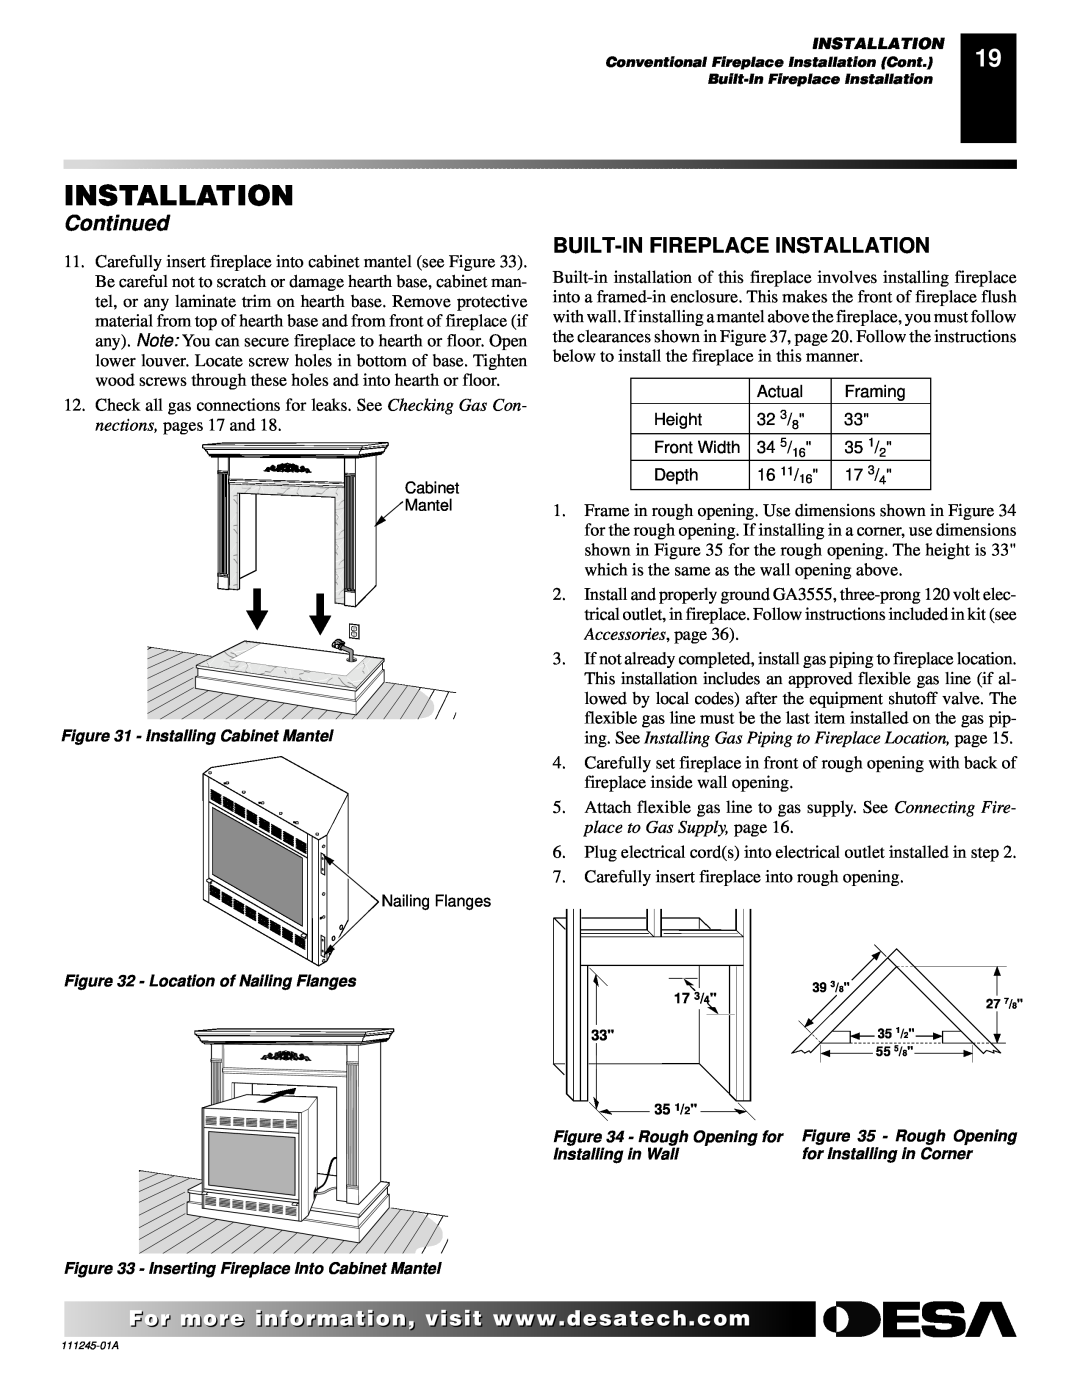 Desa CGEFP33NRB, CGEFP33PRB installation manual Continued, Built-Infireplace Installation 